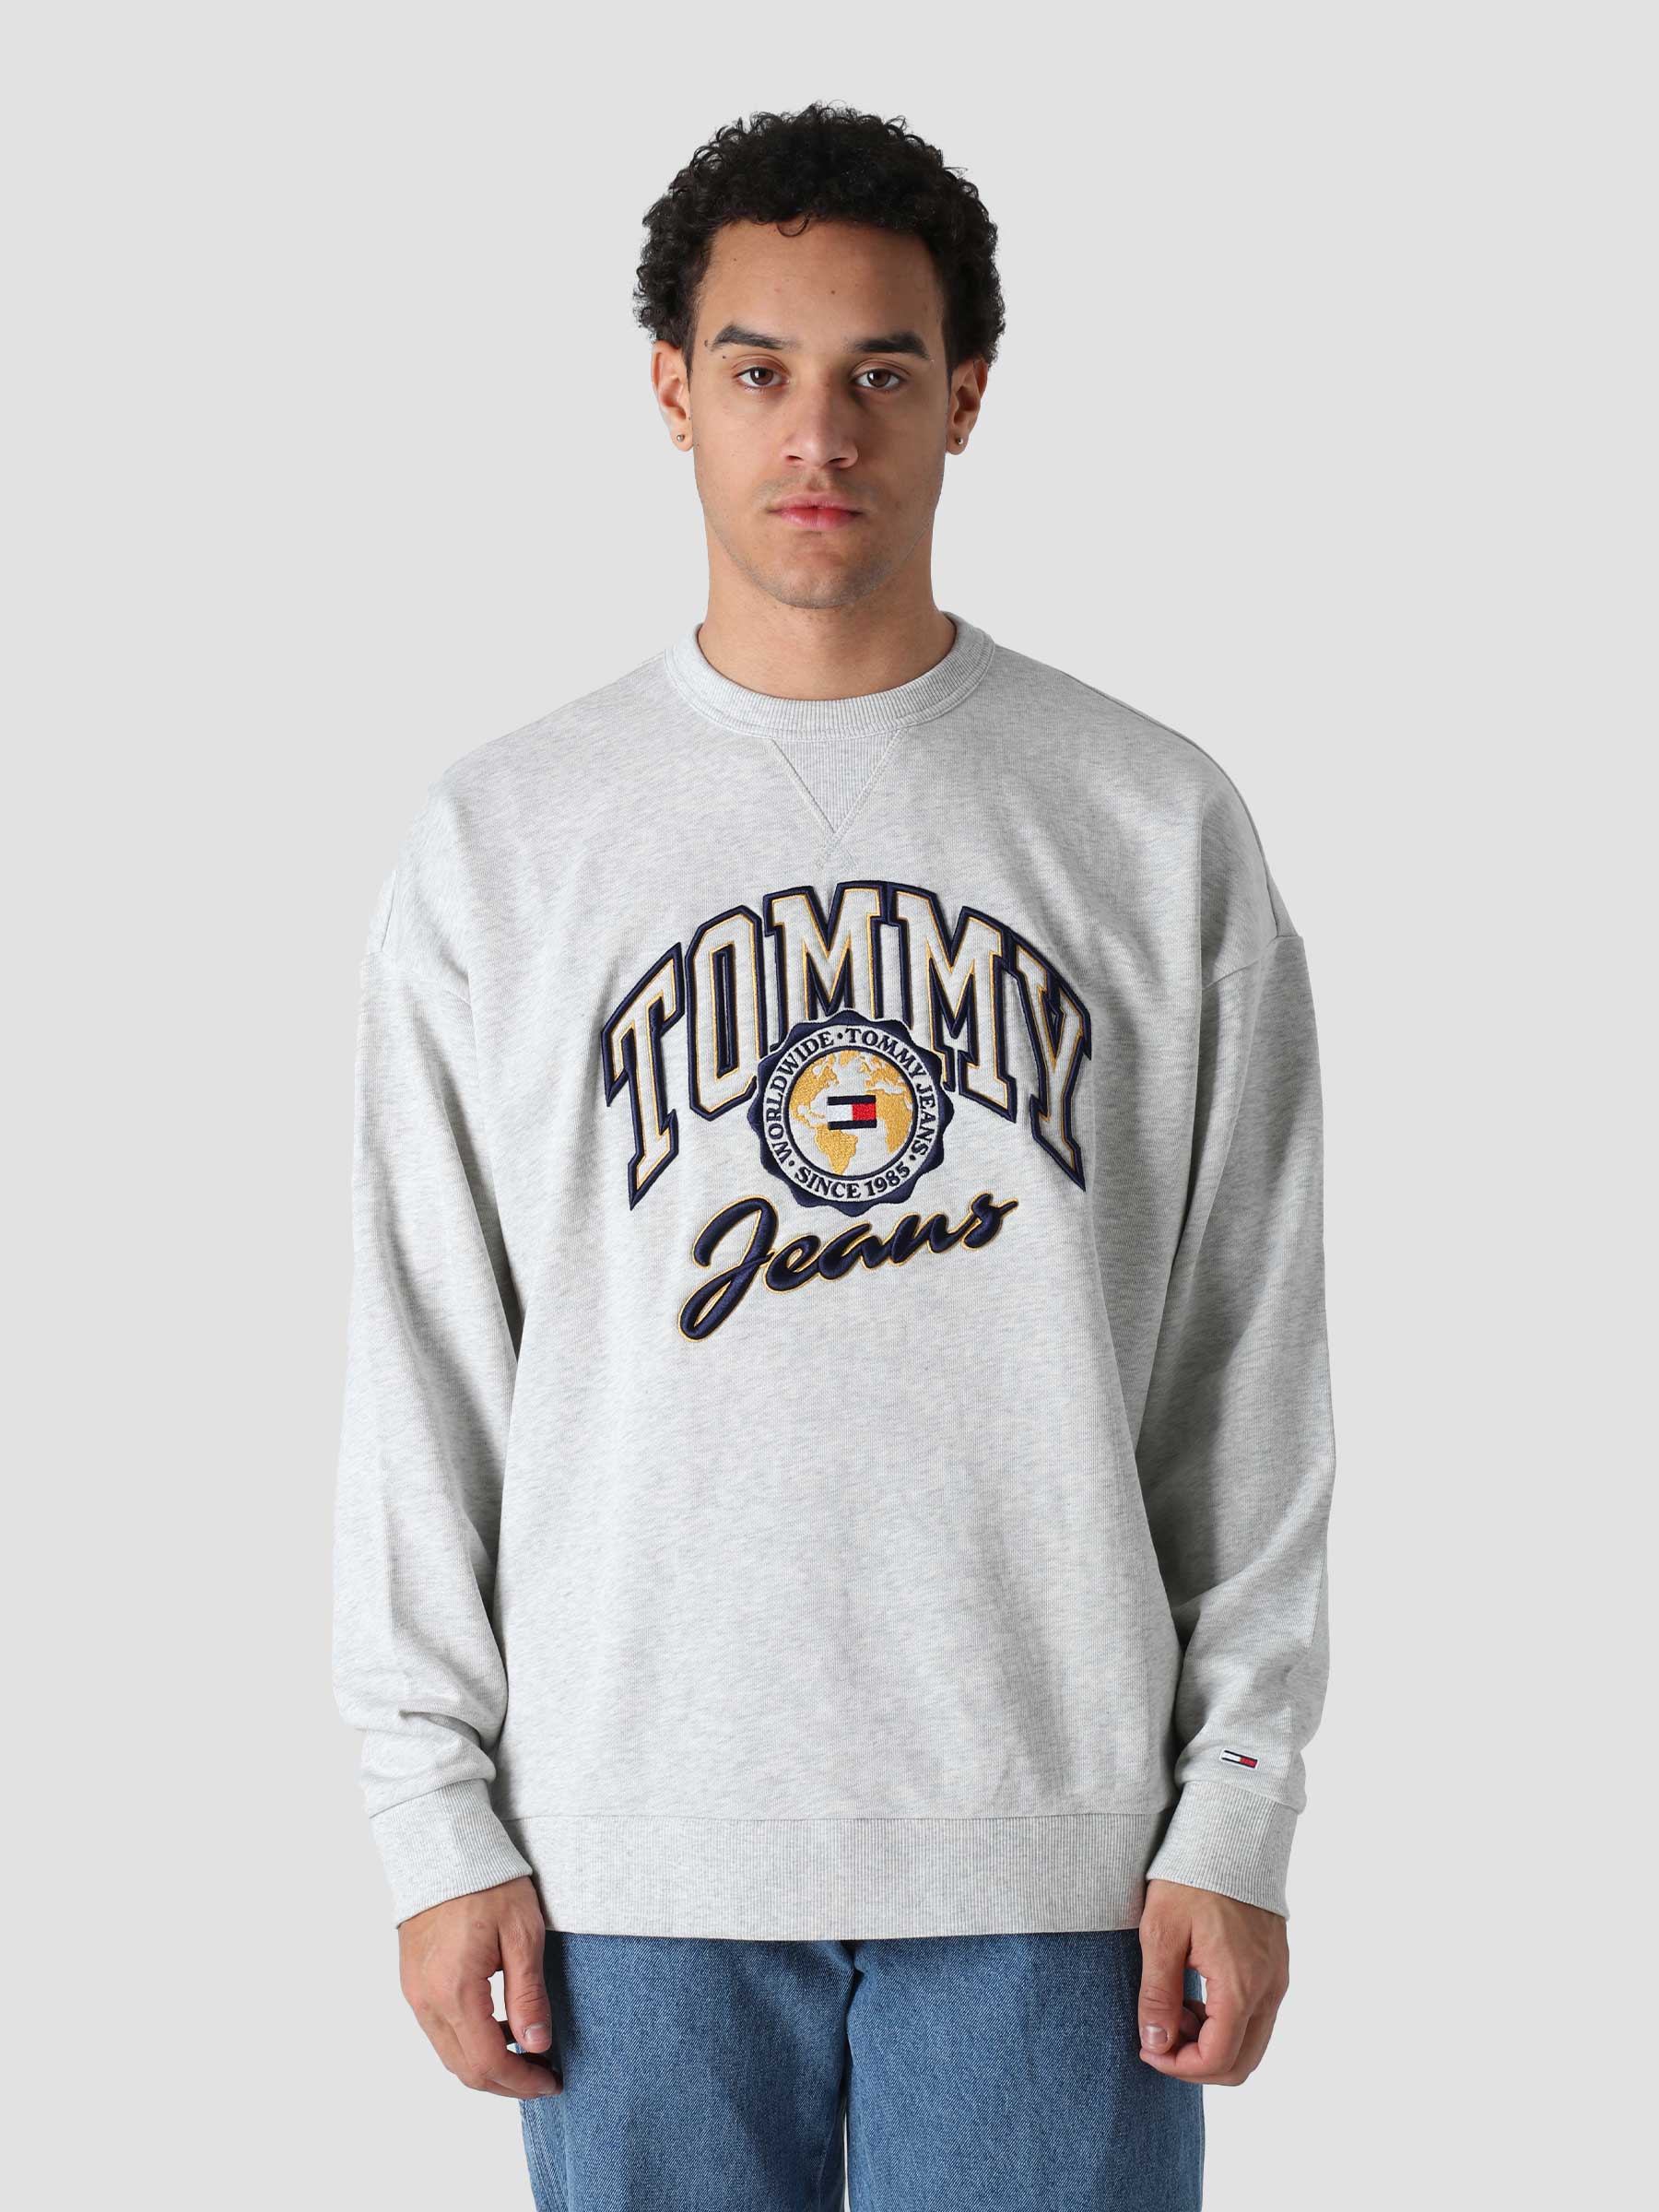 Htr Crew - Freshcotton Grey Silver College Archive TJM Jeans Tommy